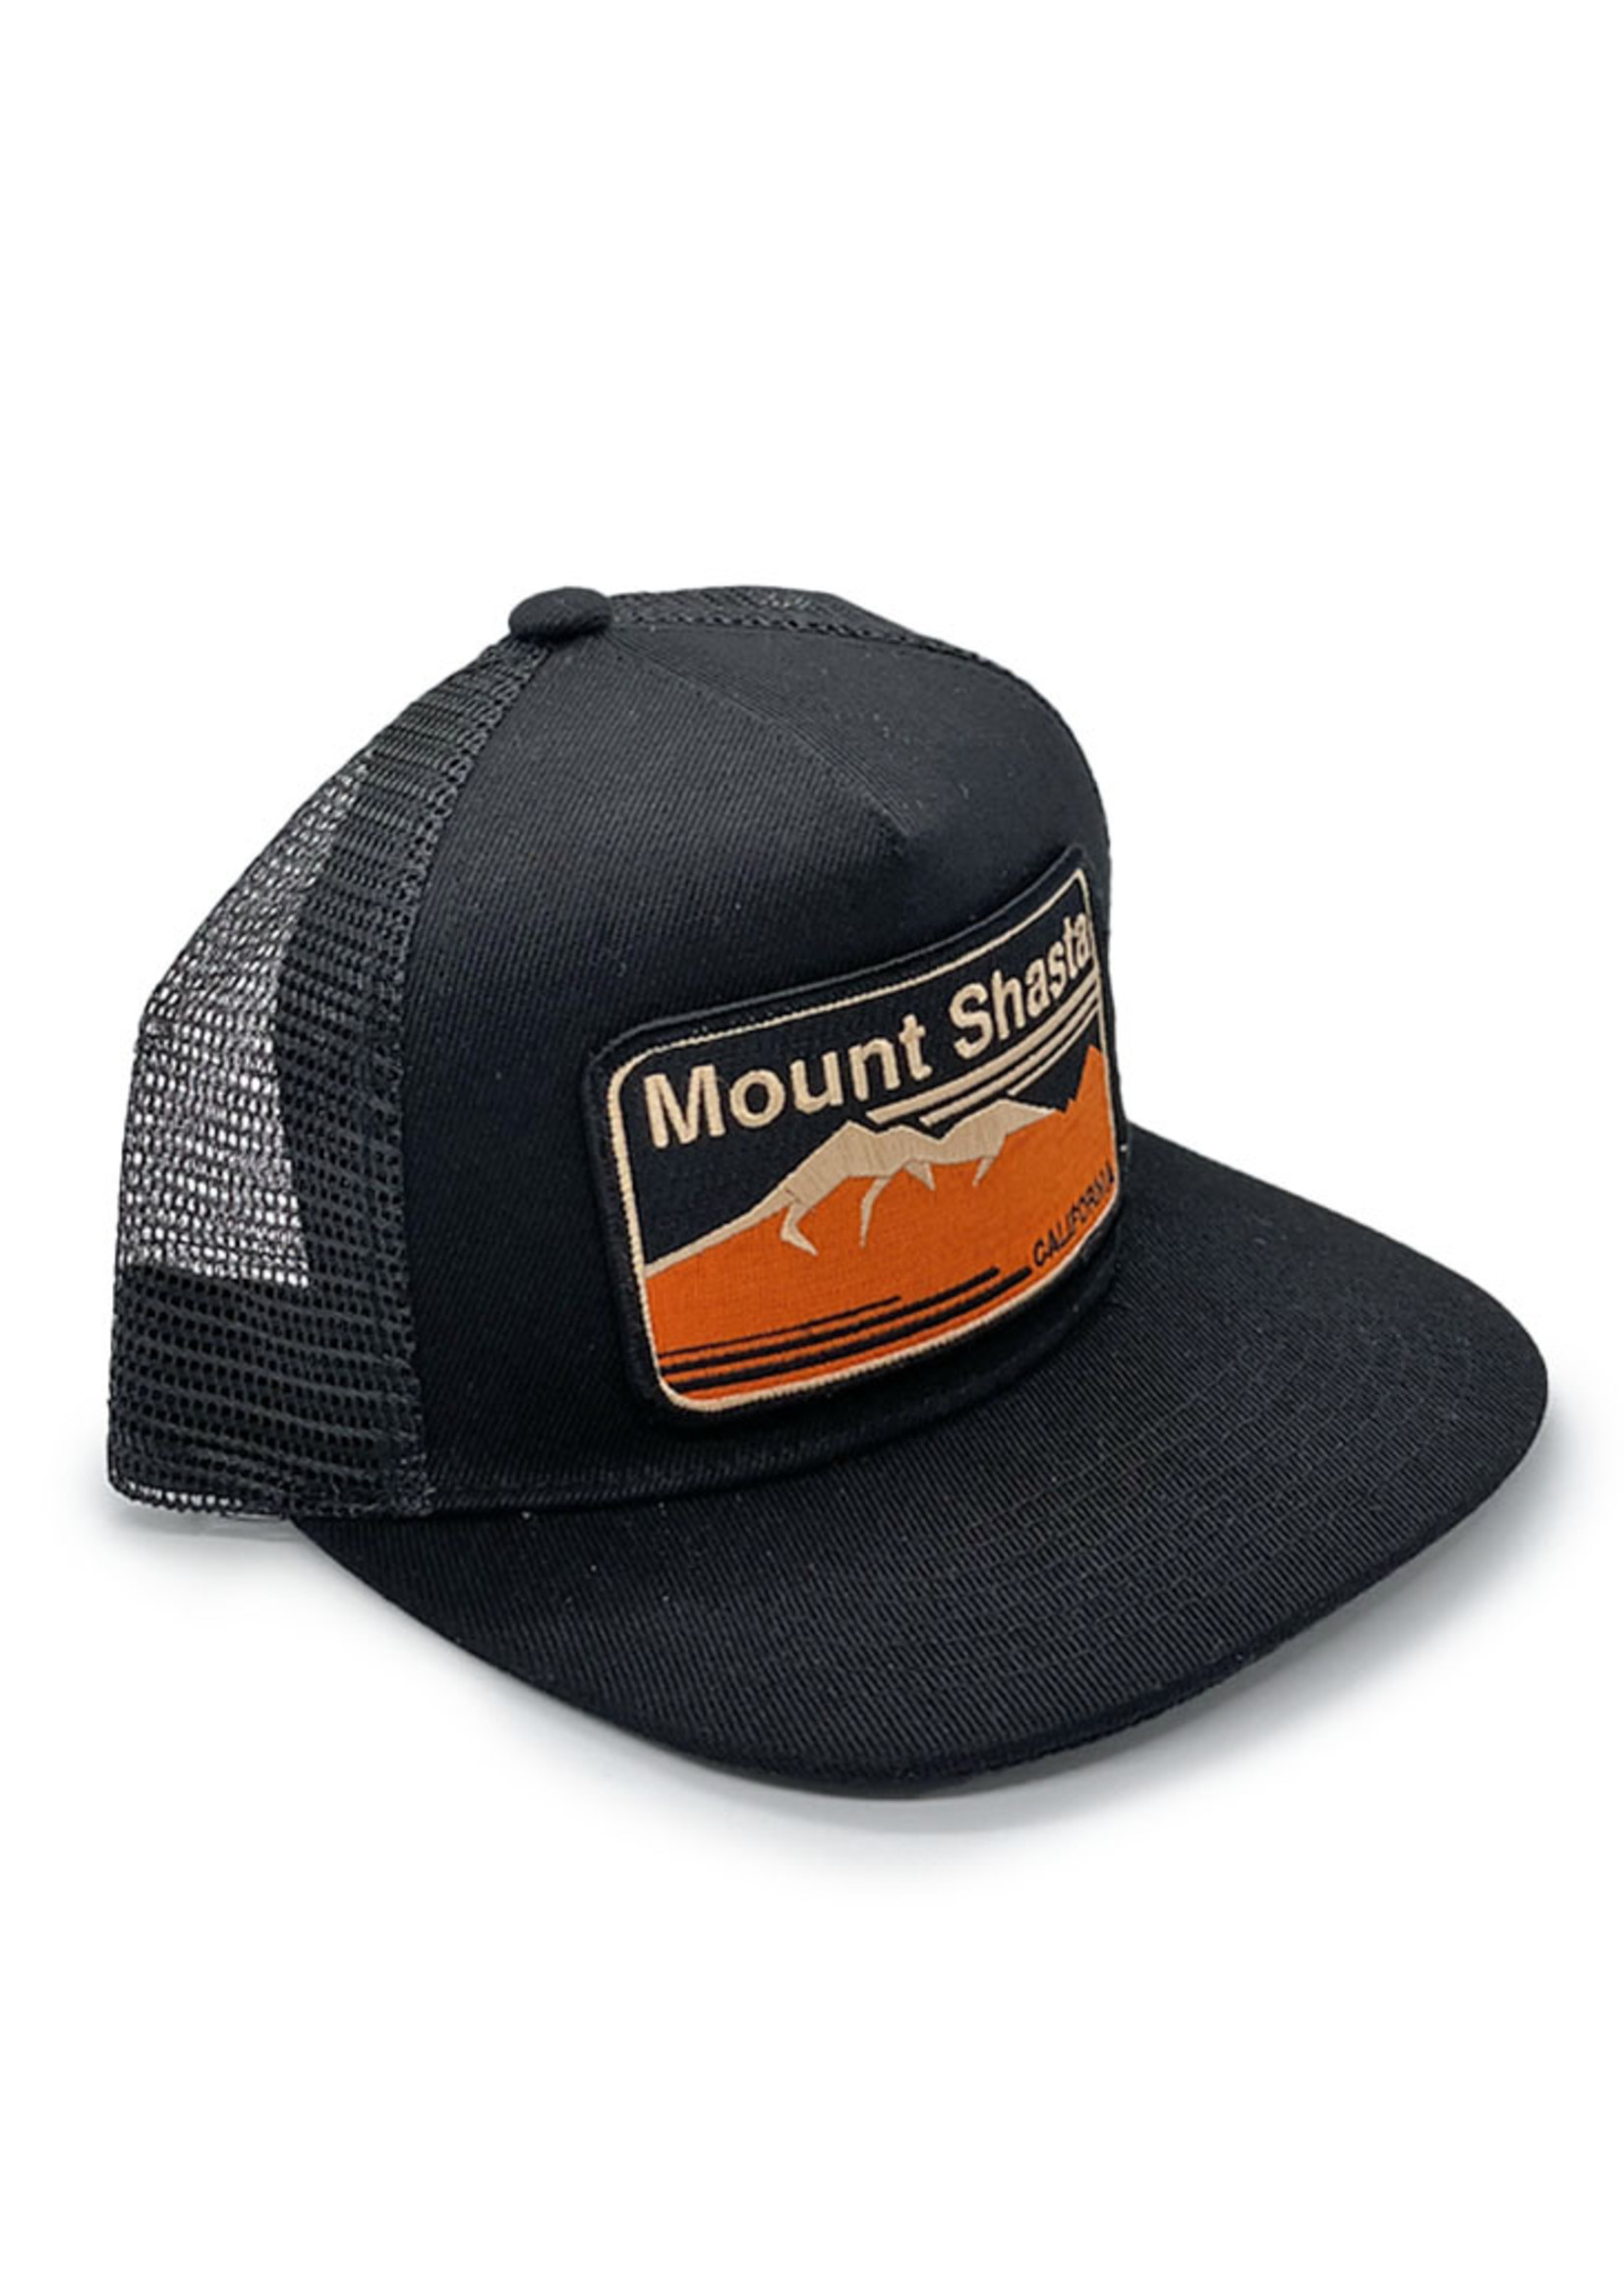 Famous Pocket Trucker Hats Mount Shasta CA